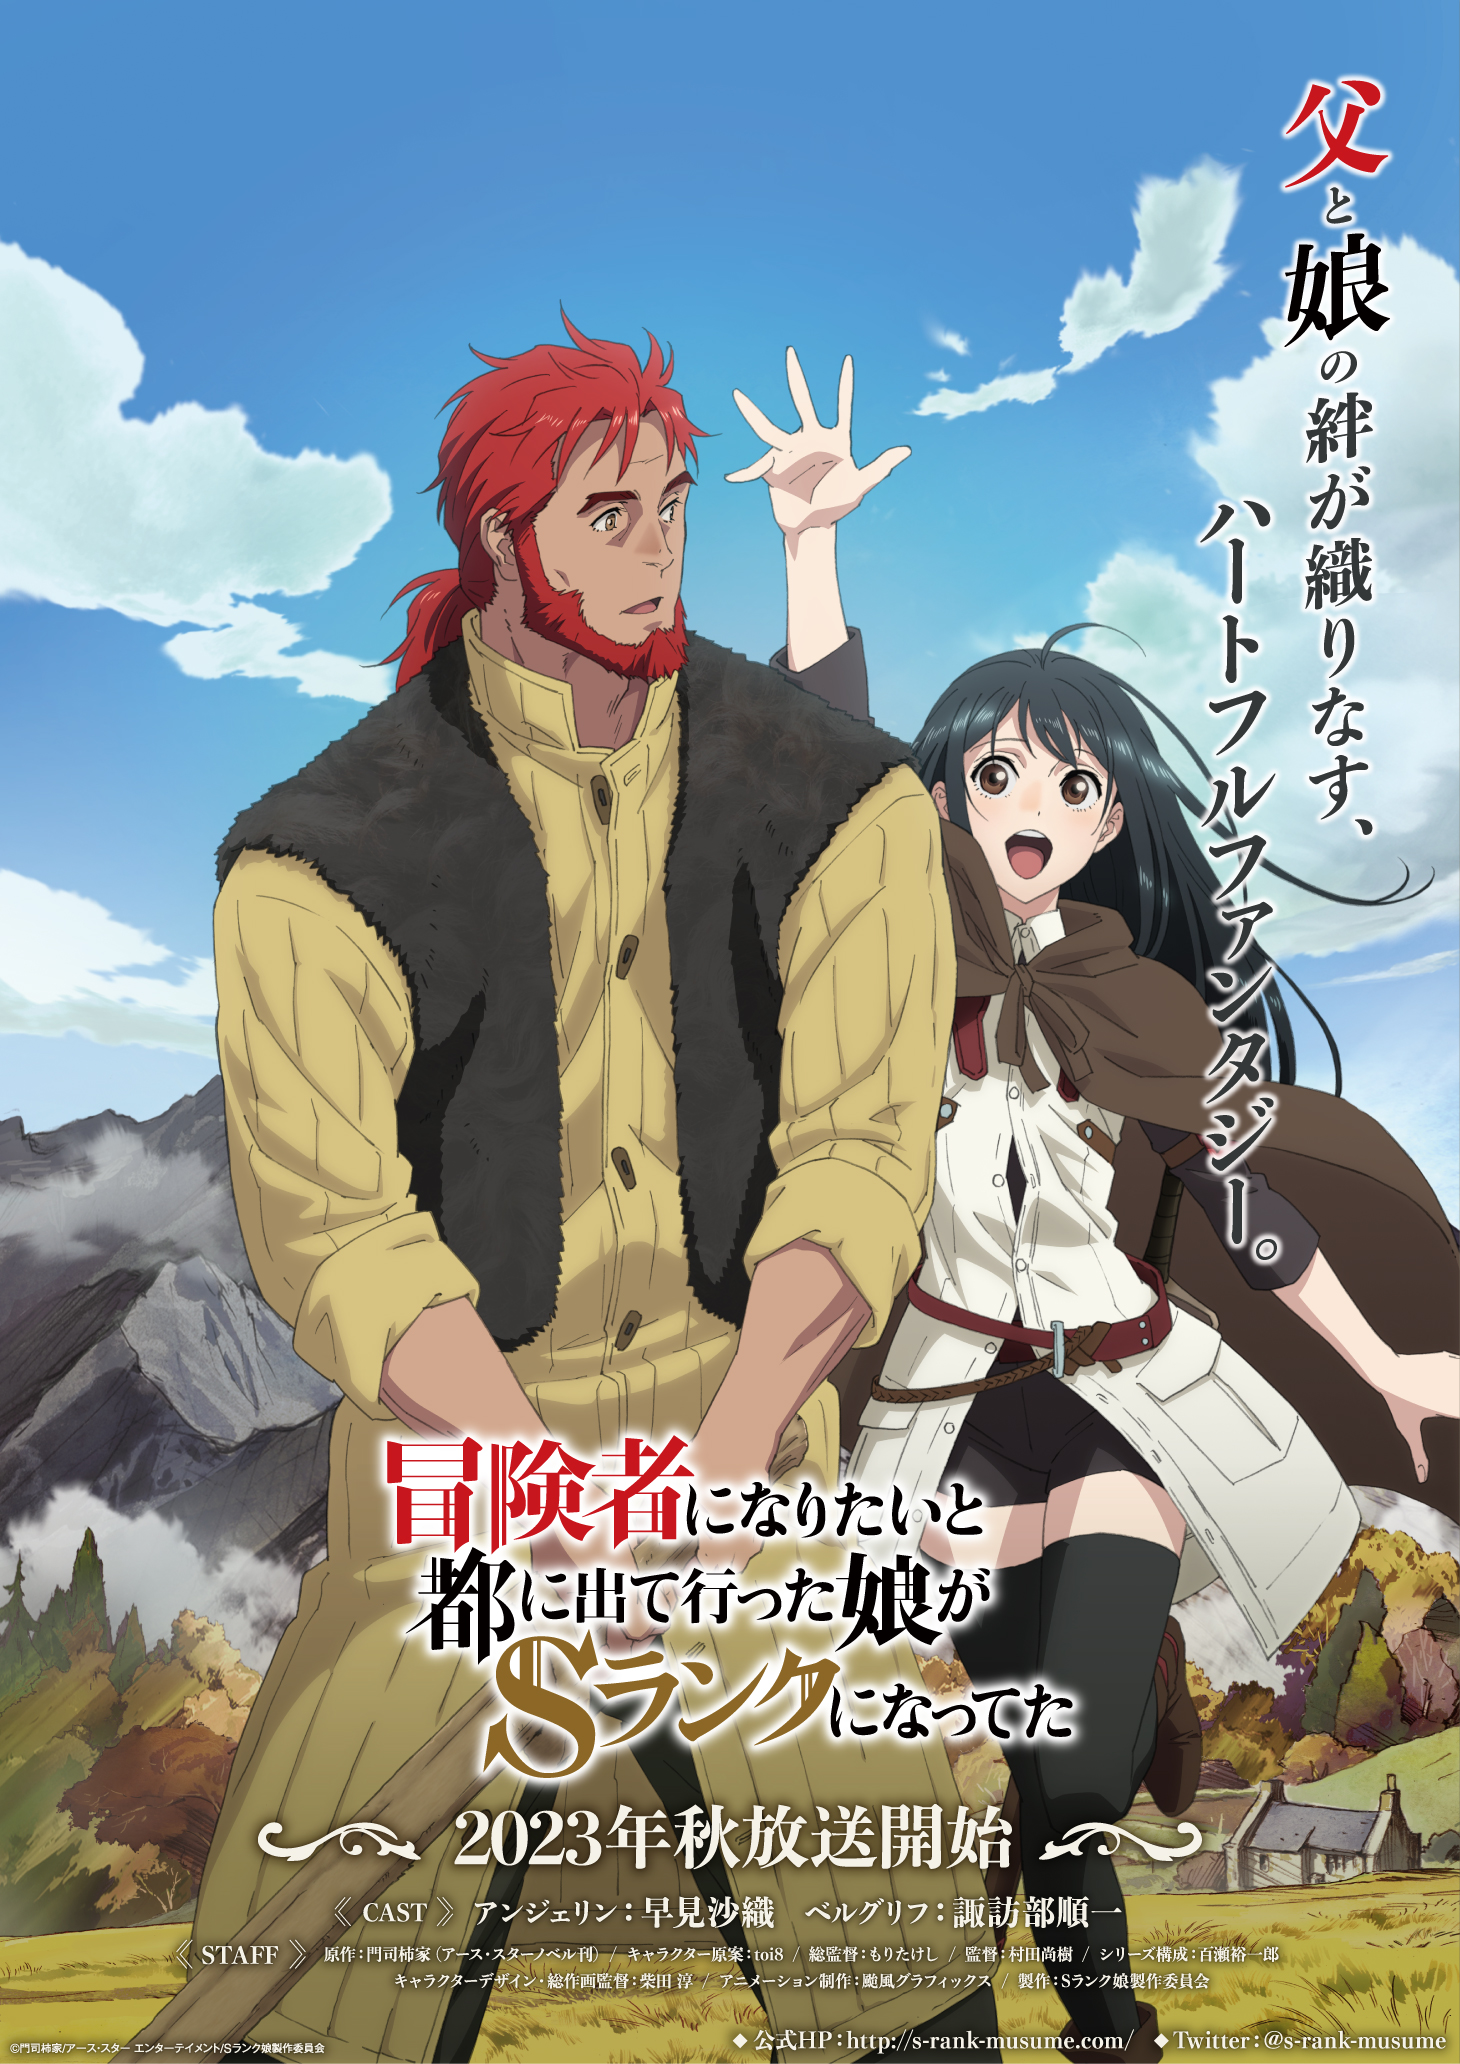 Net-juu no Susume Gets TV Anime in October - Crunchyroll News